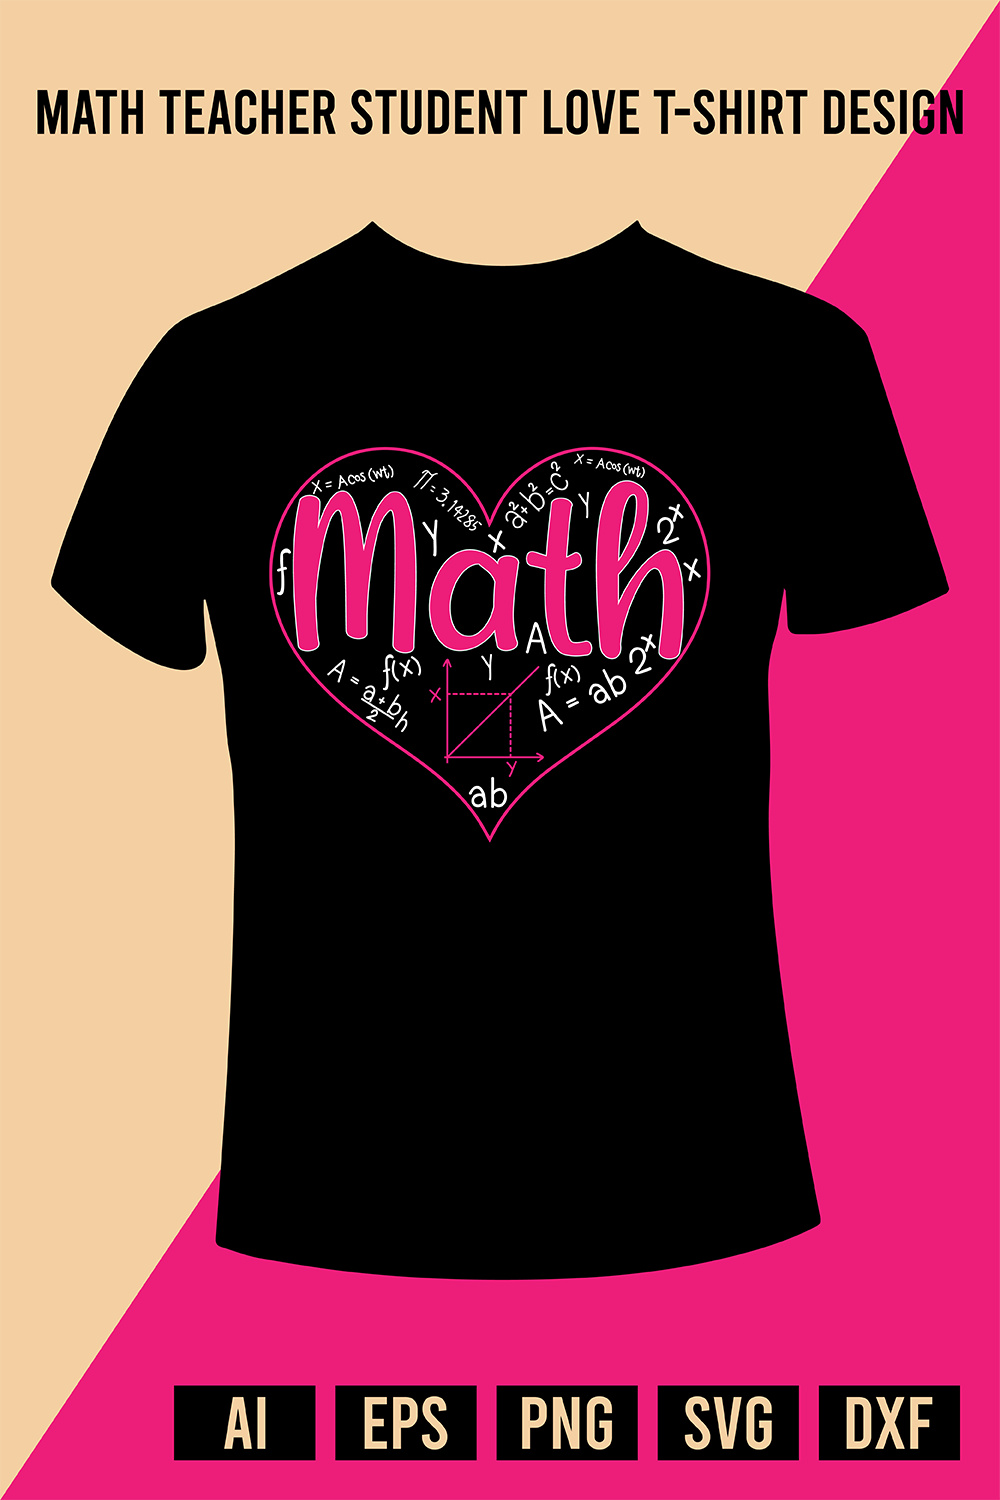 Math Teacher Student Love T-Shirt Design pinterest image cover file.